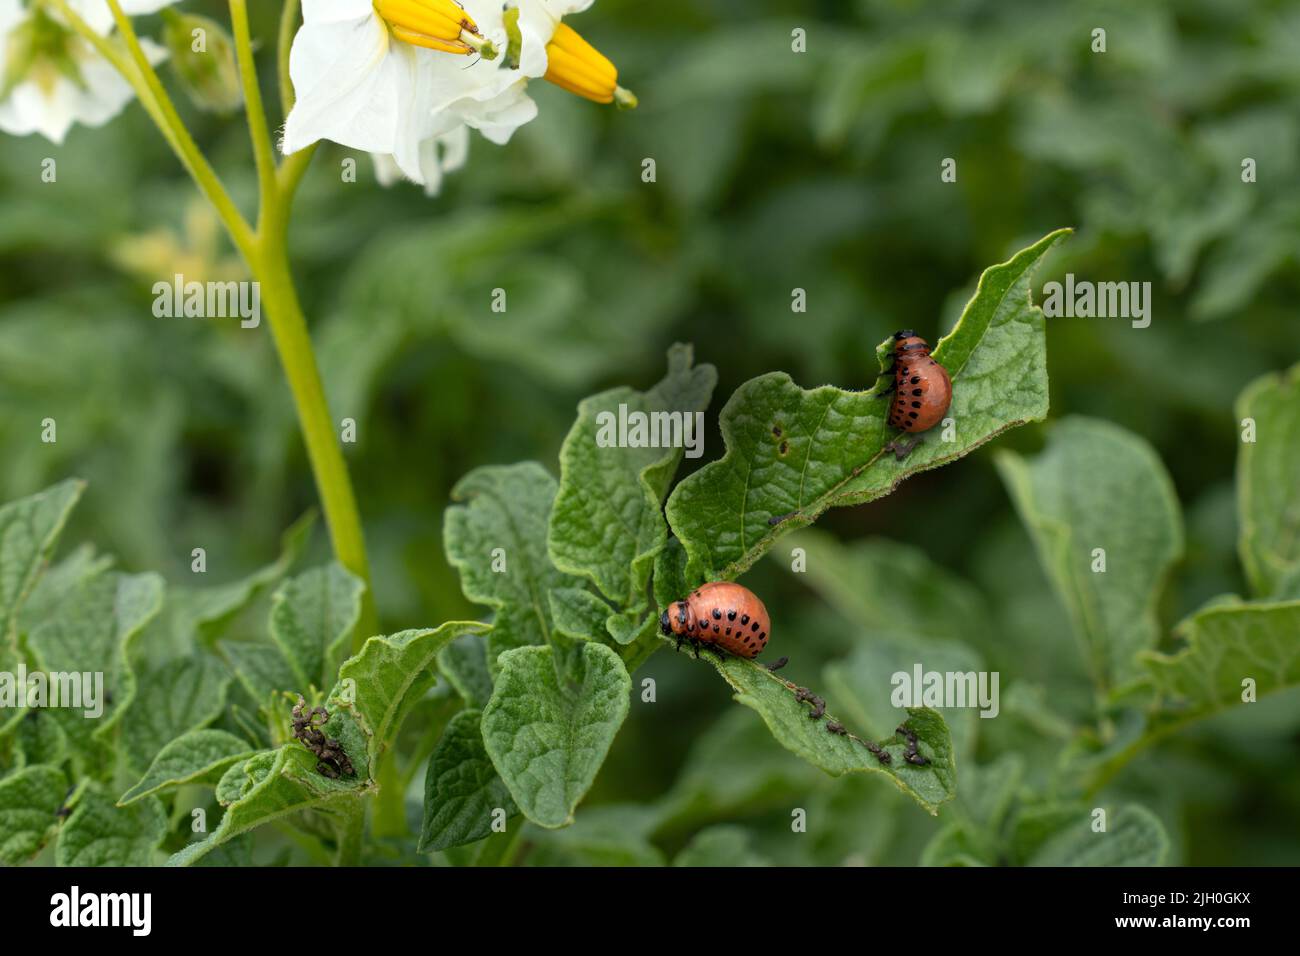 Two Colorado potato beetle larvae on a potato plant Stock Photo